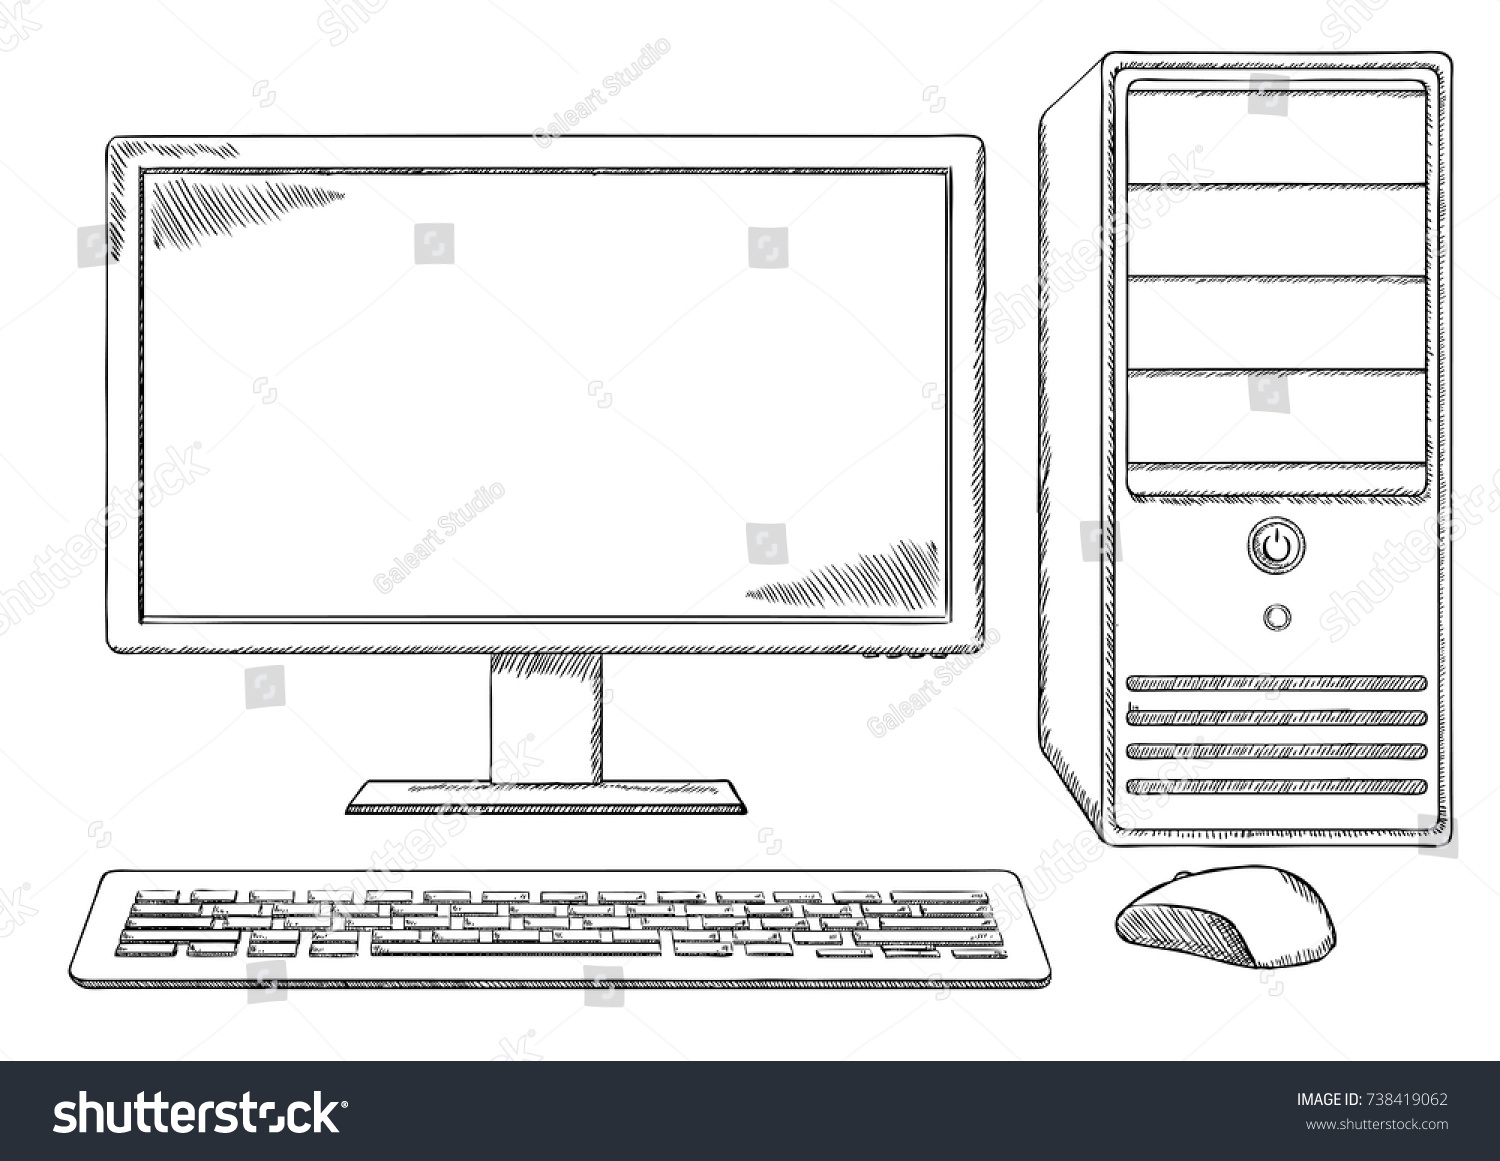 Компьютер схематичный рисунок